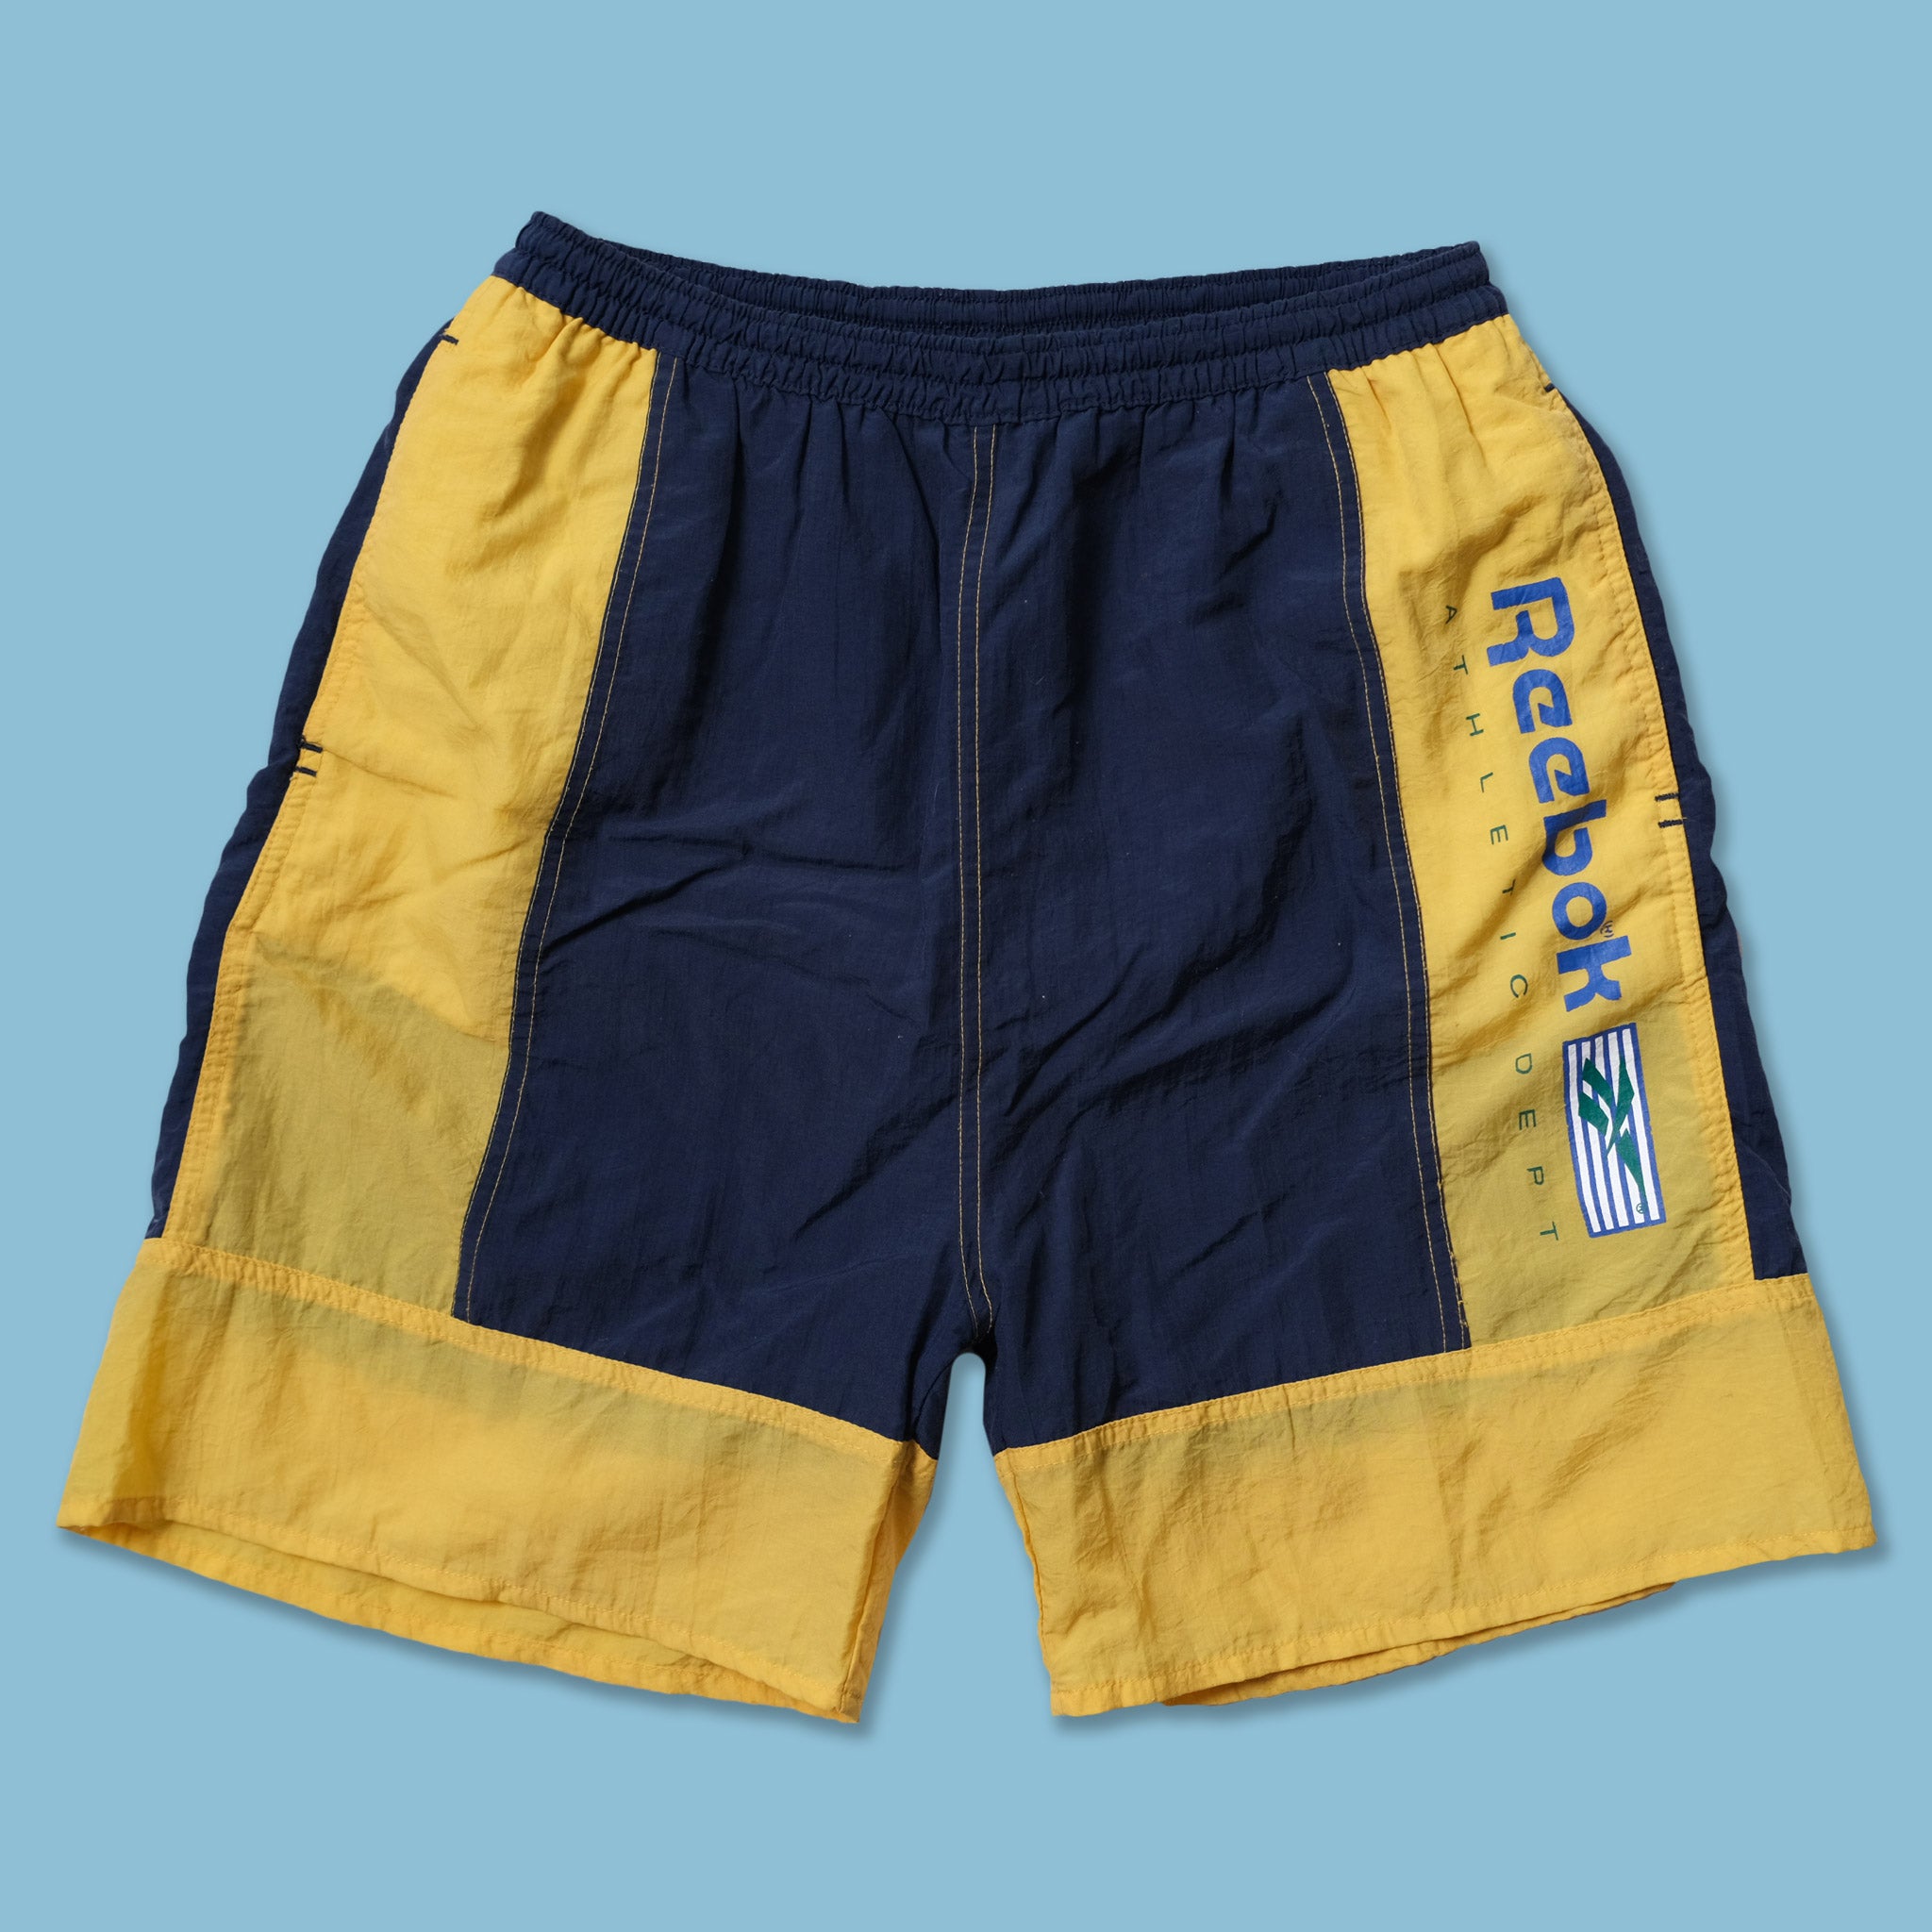 vintage reebok shorts